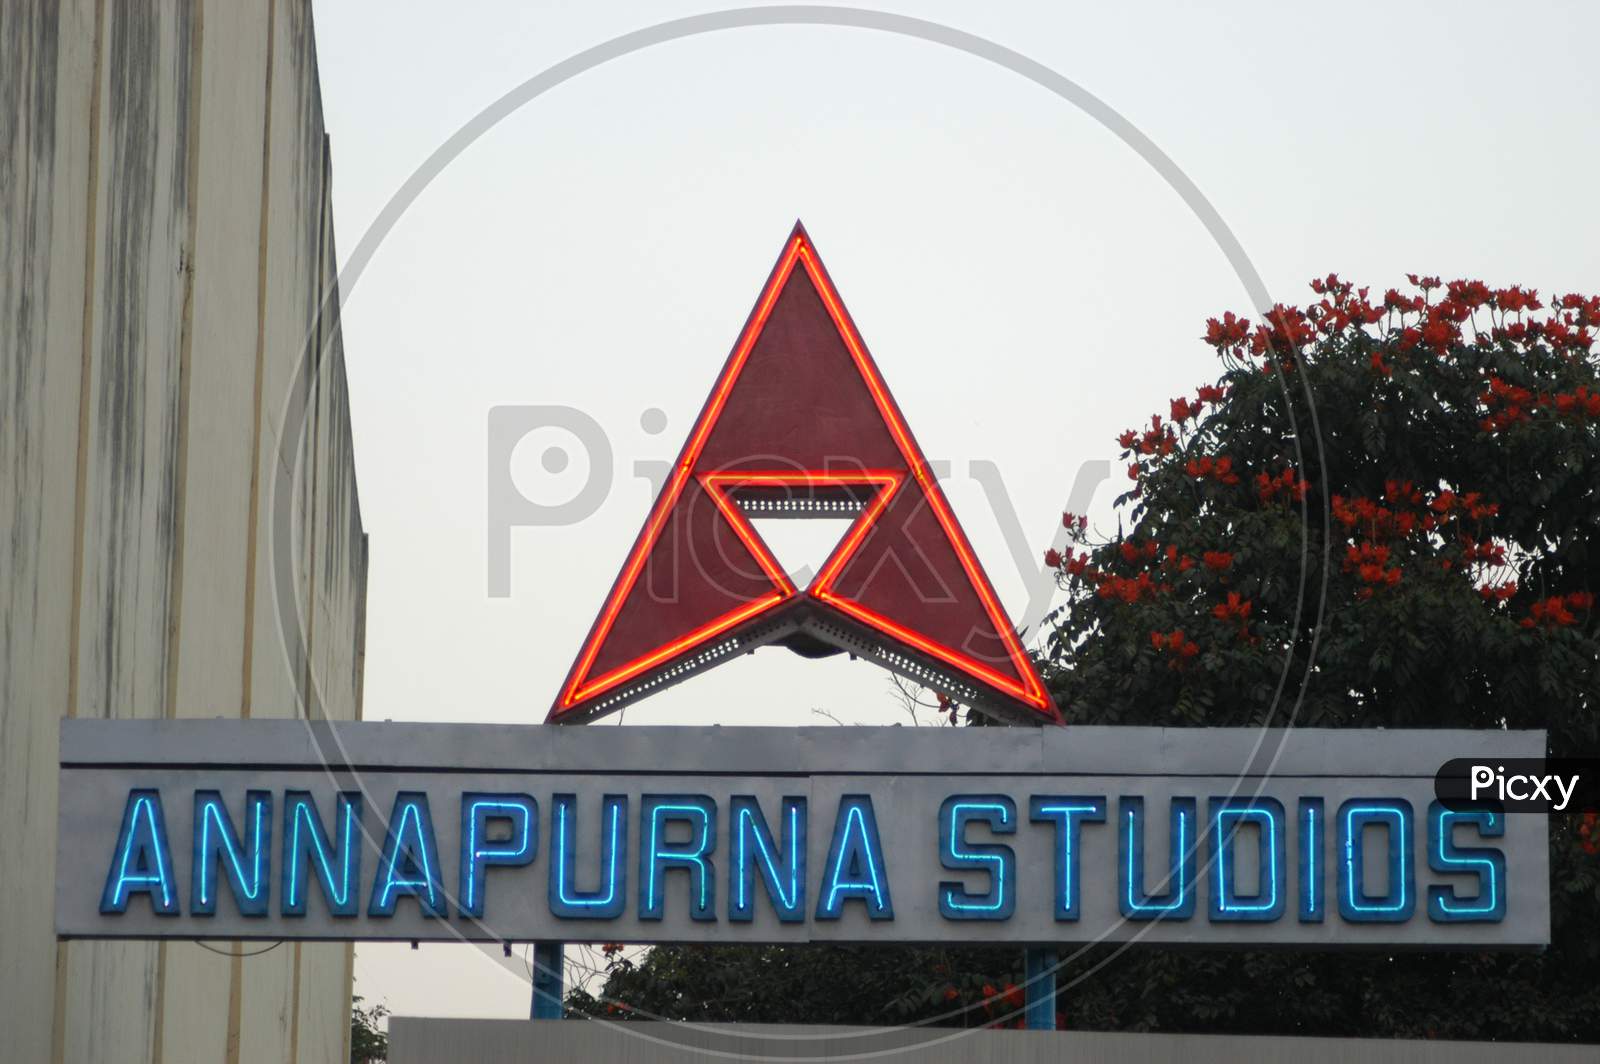 Annapurna Studios In Hyderabad Name Board